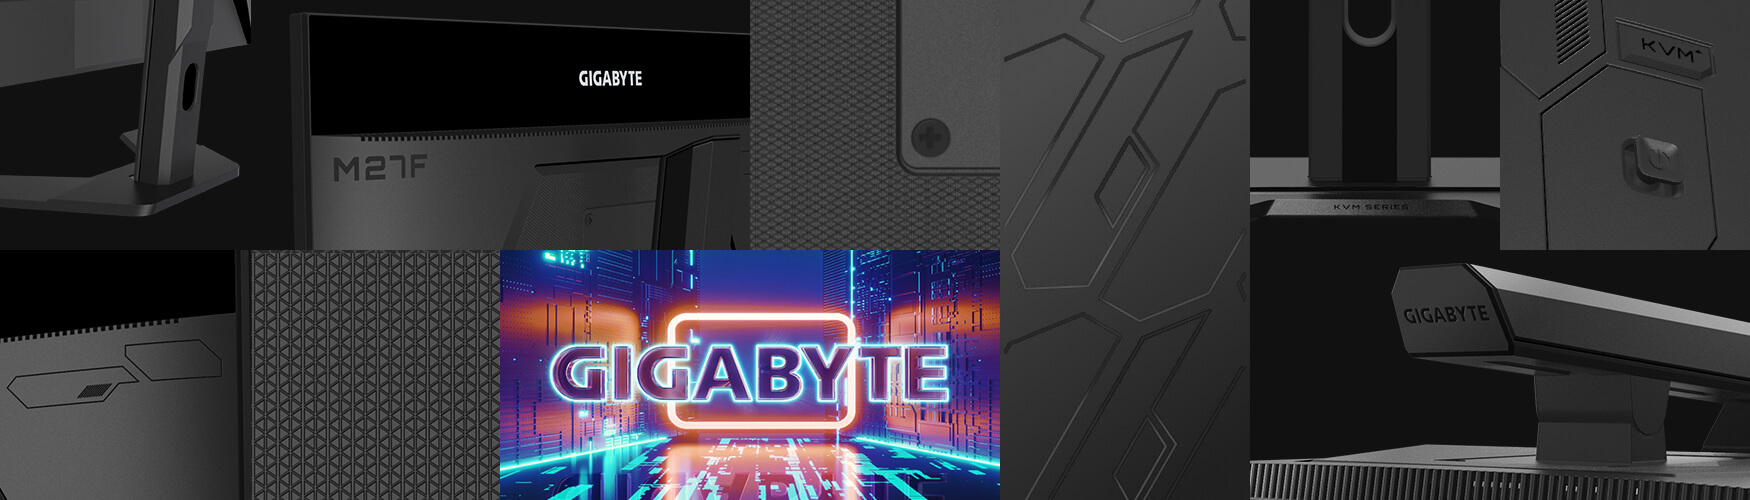 Gigabyte Monitor Gamer 27 Pulgadas M27F OPENBOX 144Hz 1ms KVM USB-C Altura  Regulable EVENTO VIVE LA EXPERIENCIA GAMER - ETCHILE